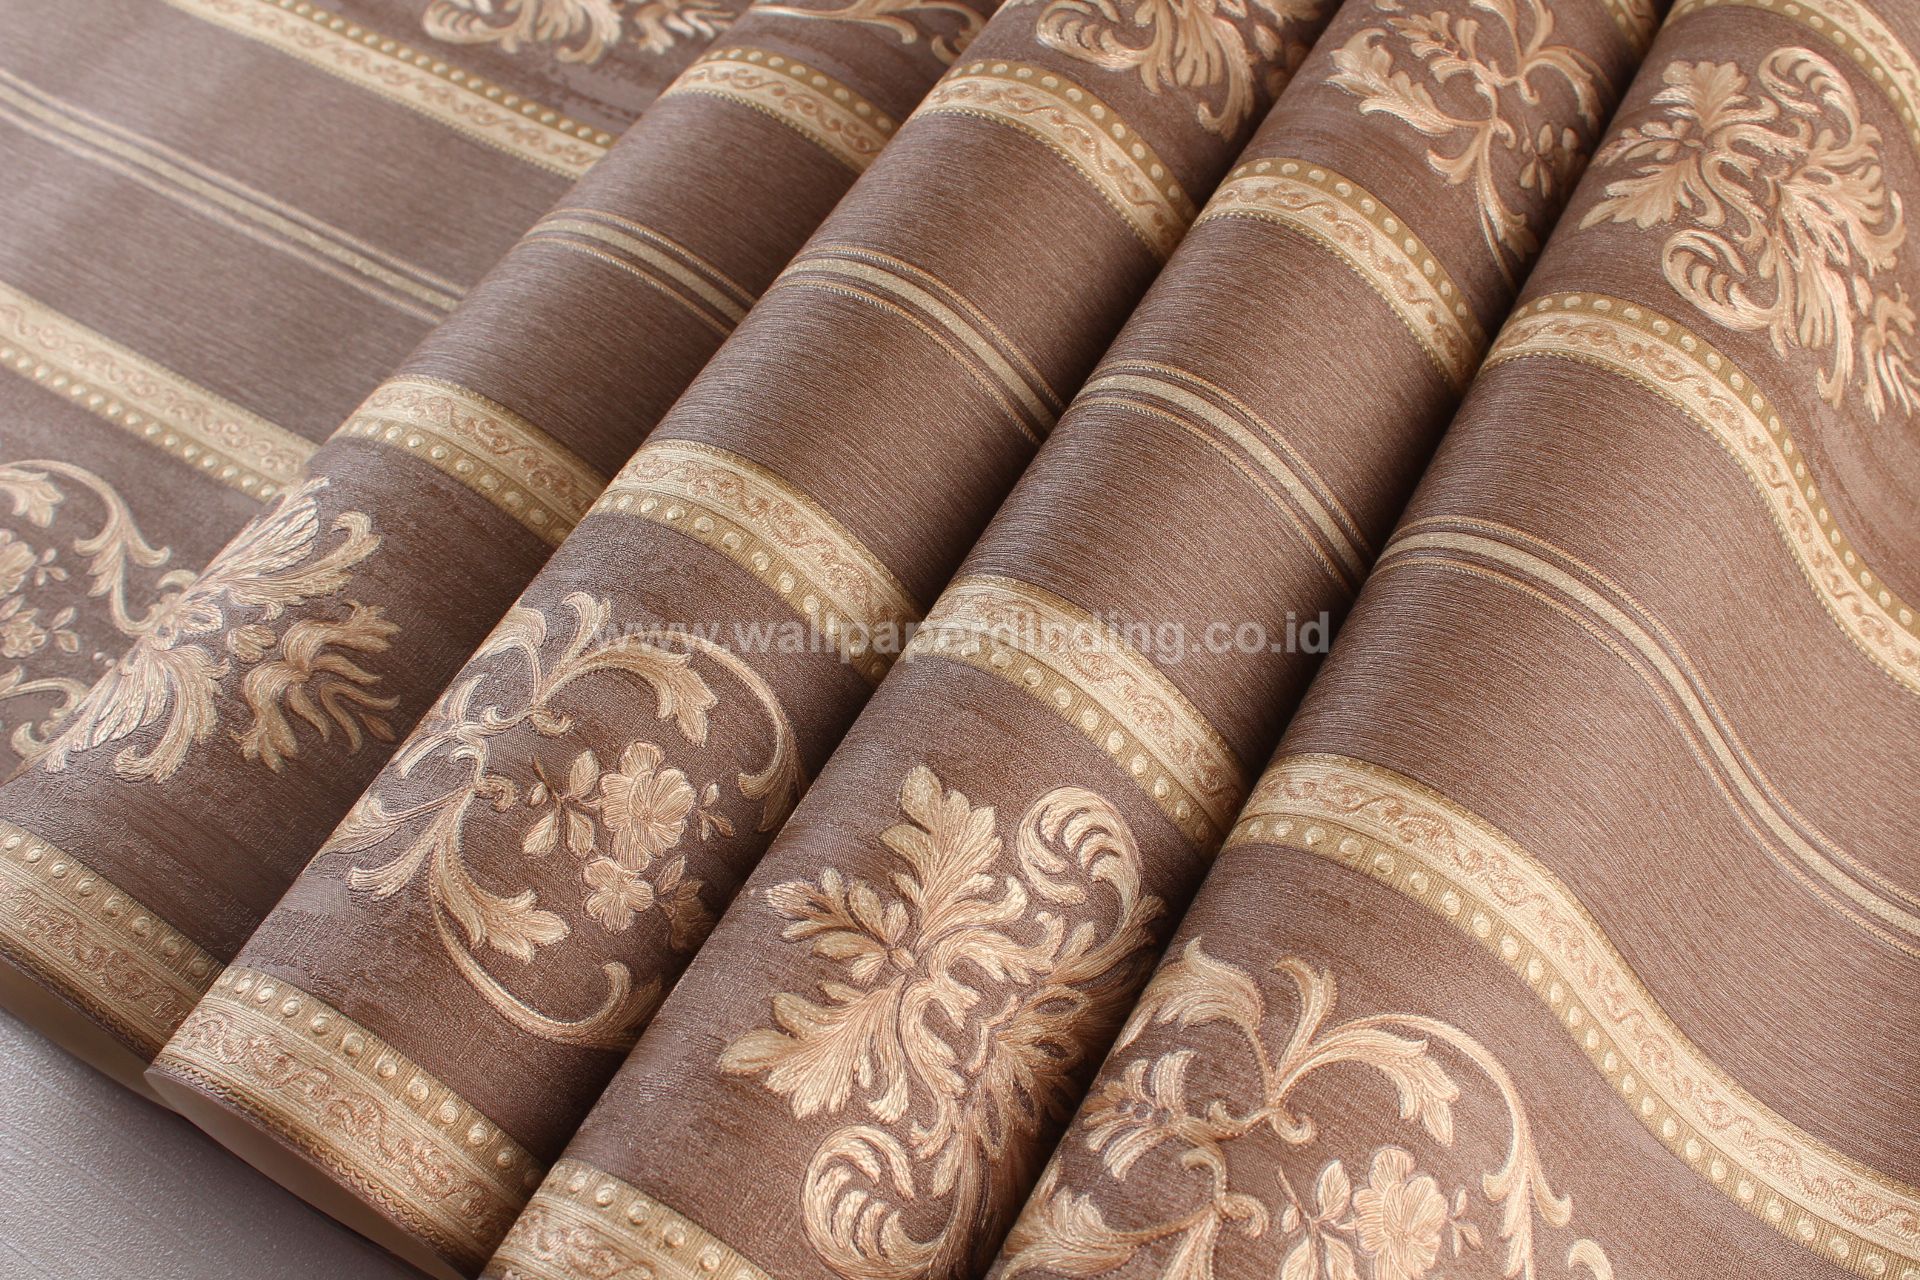 Background Batik Coklat